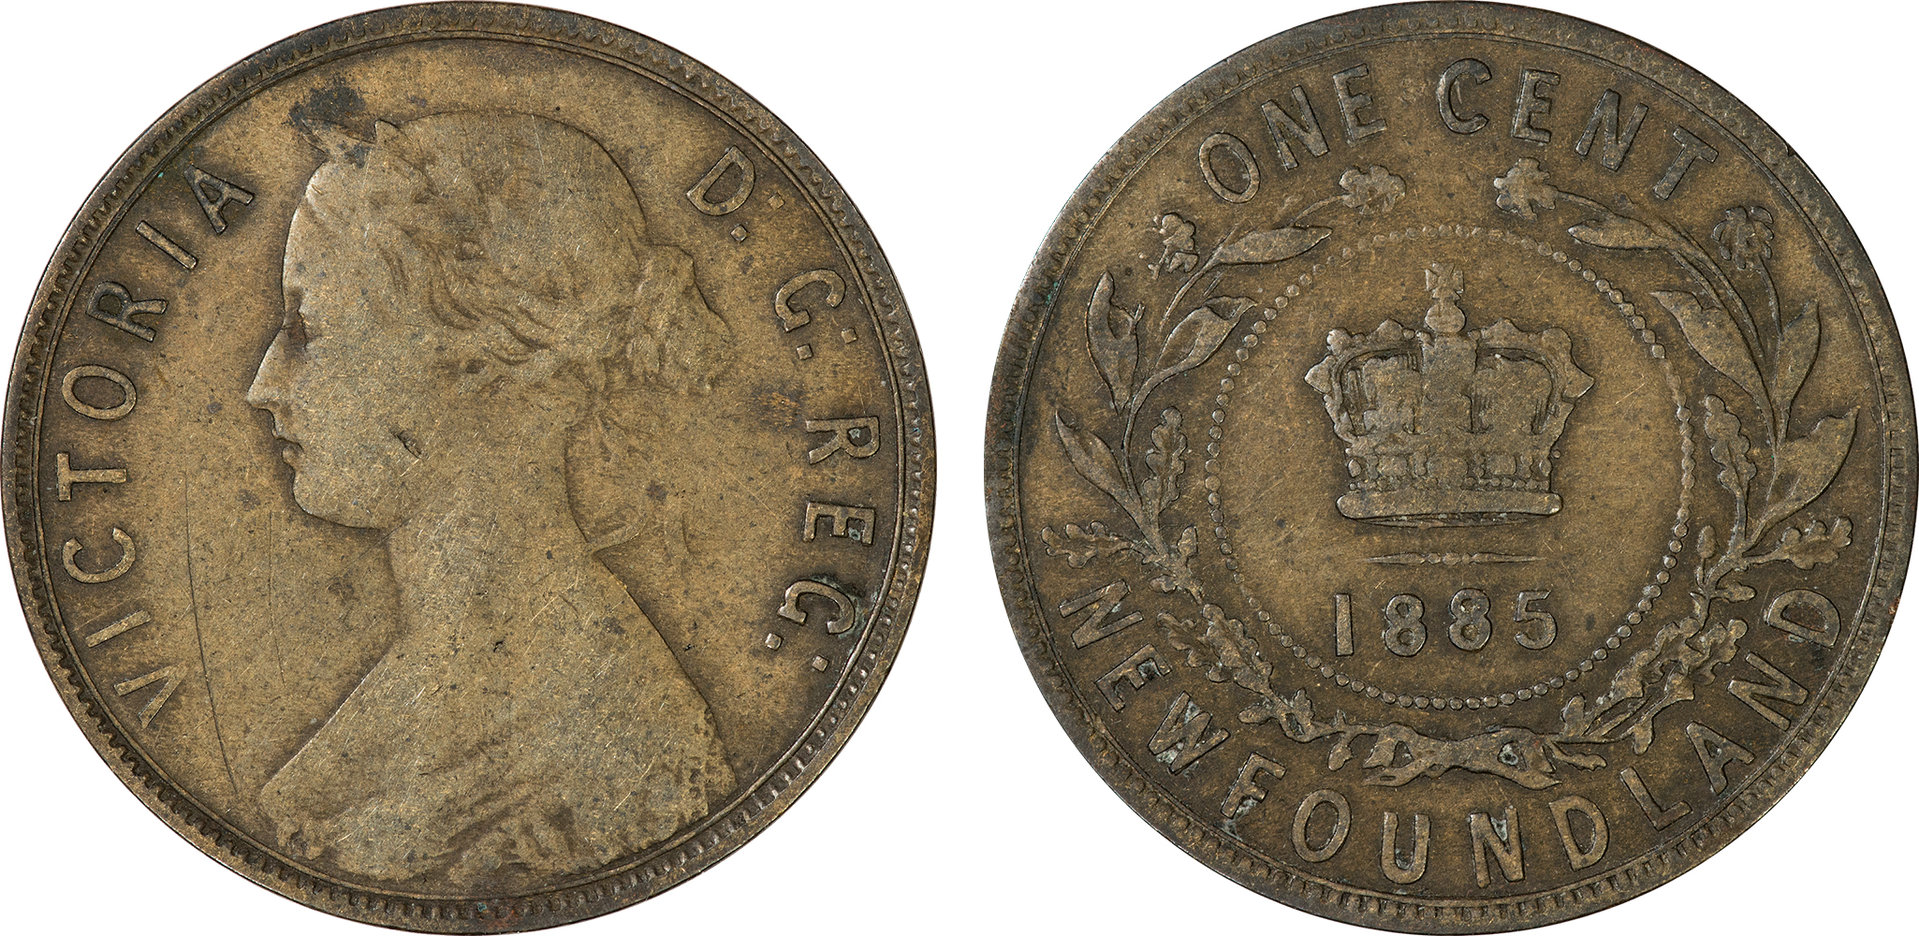 Canada (Newfoundland) - 1885 1 Cent.jpg